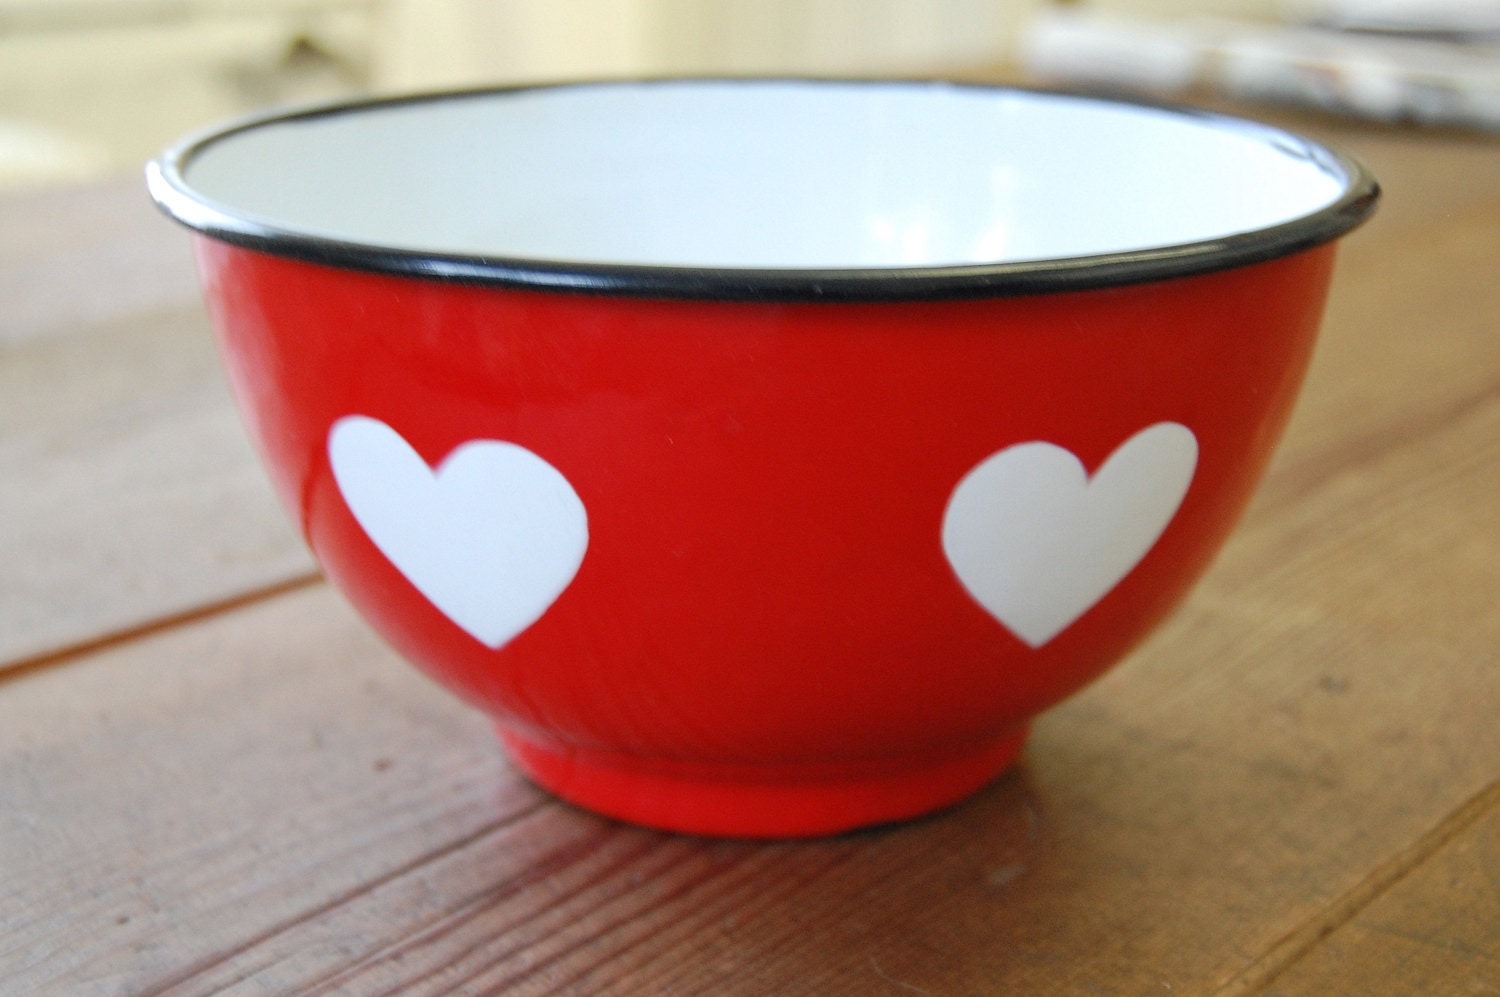 Red vintage enamel bowl, white hearts decoration